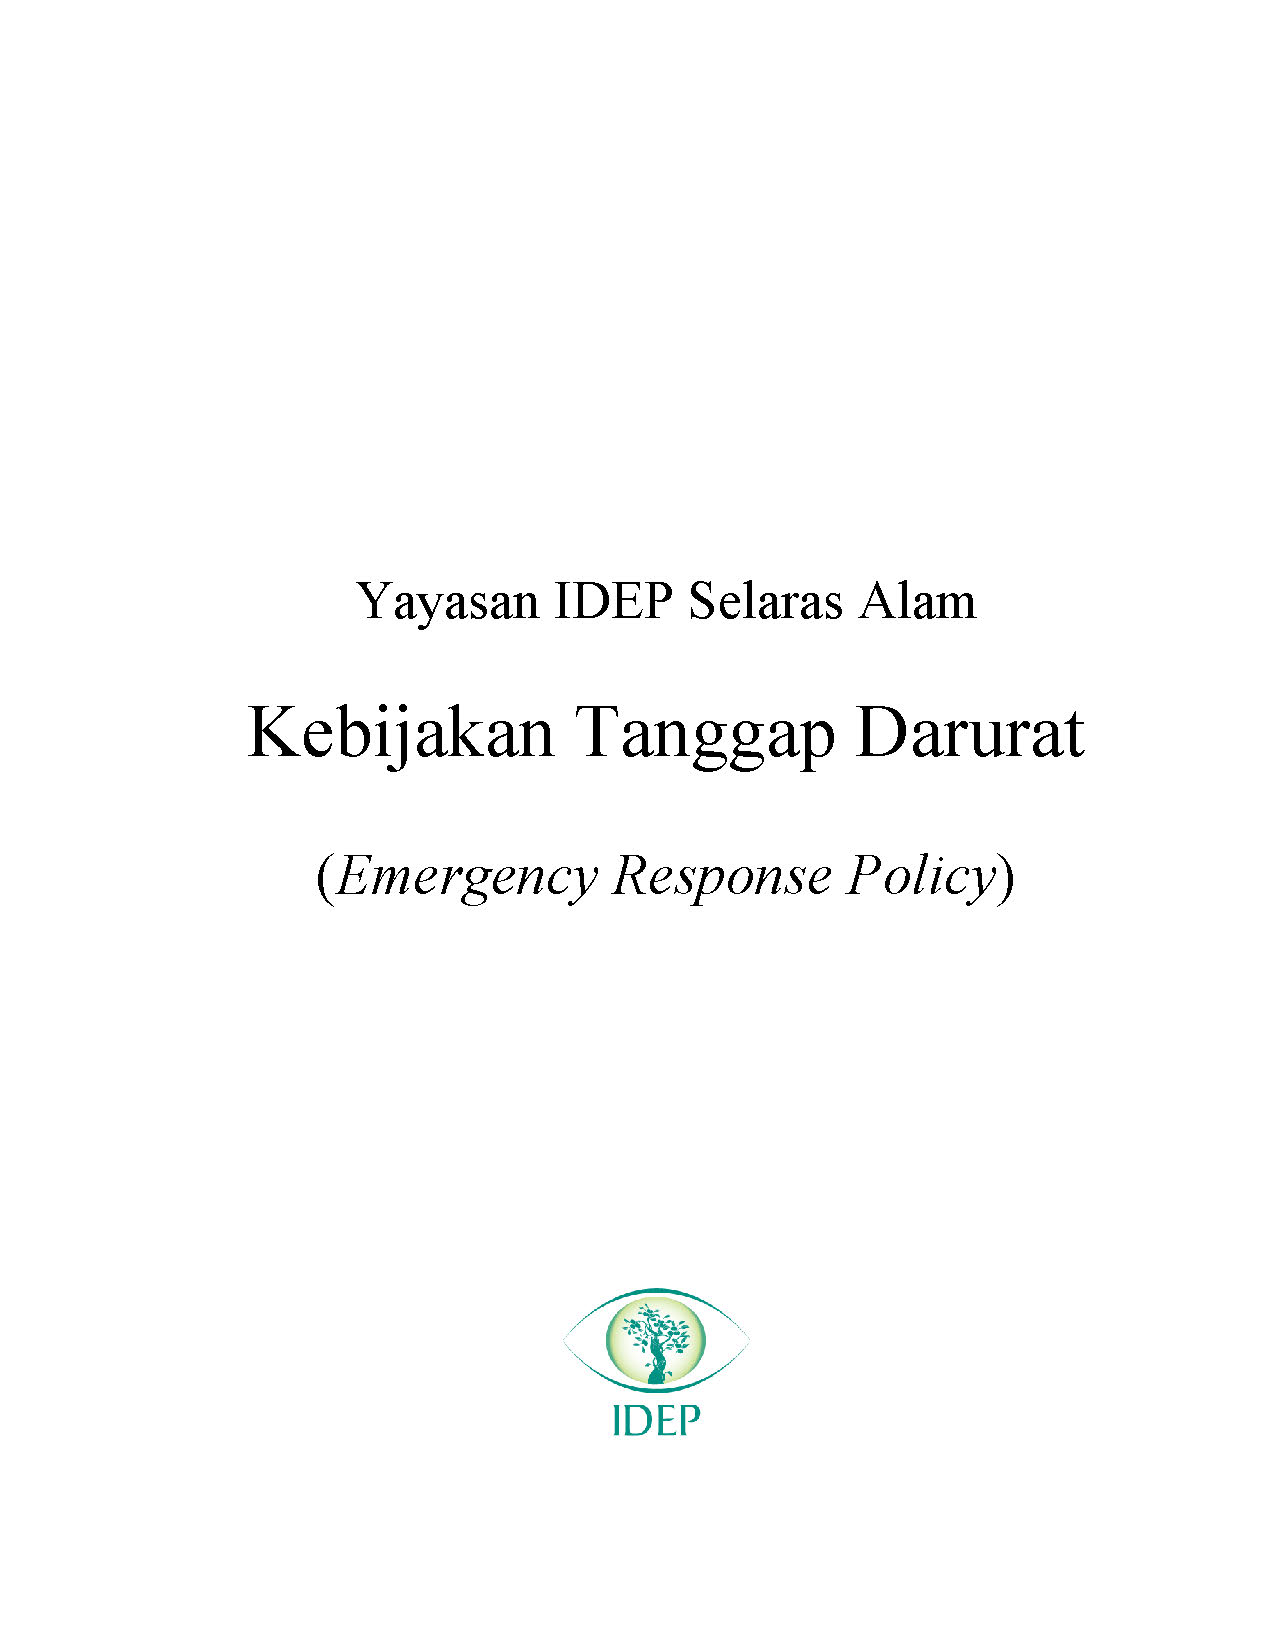 IDEP Foundation Emergency Response Policy